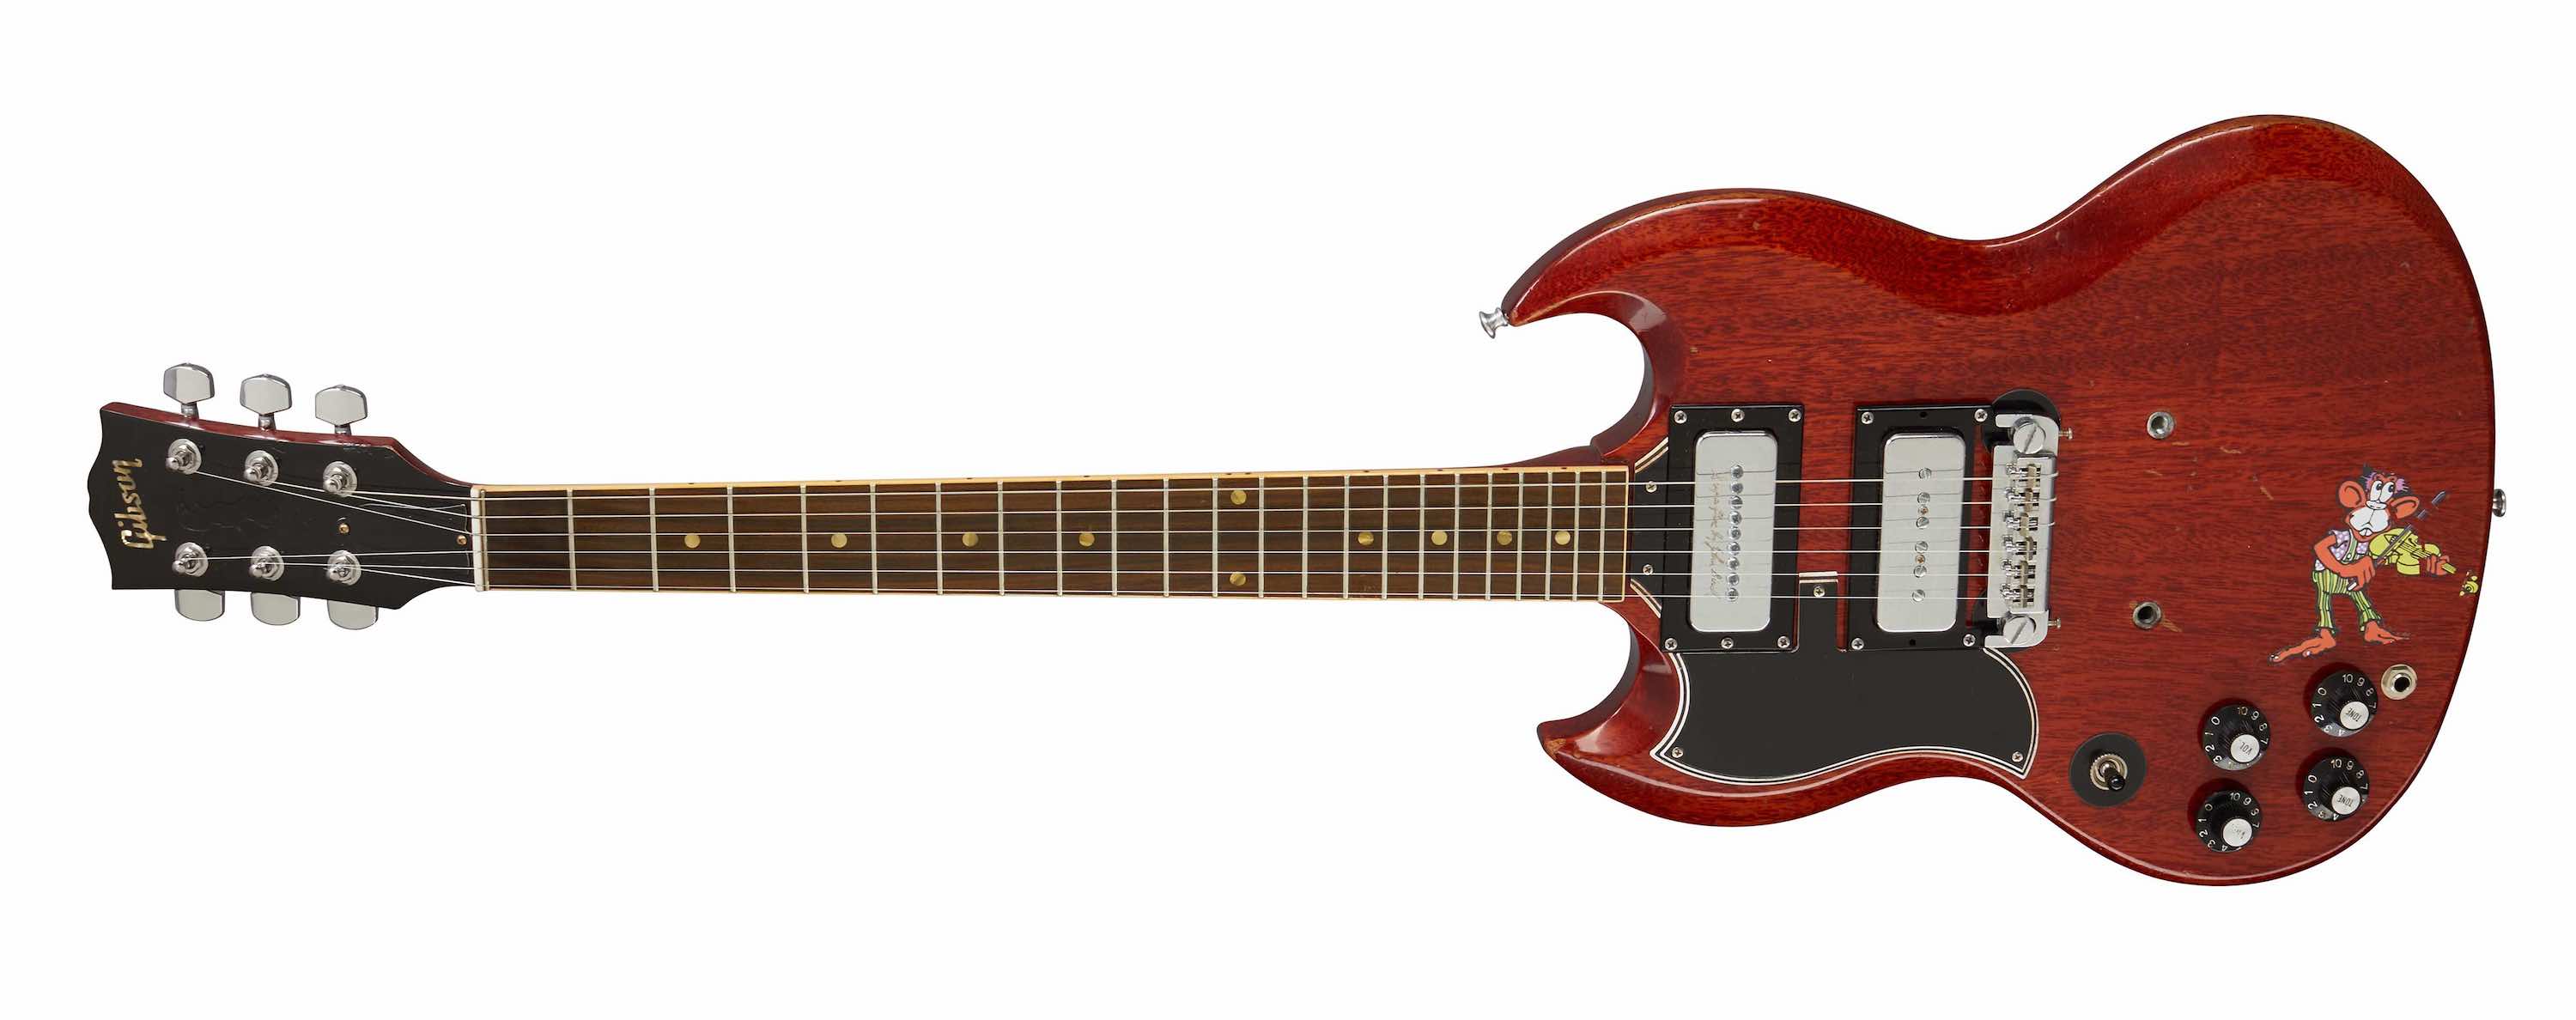 Gibson SG Monkey Tony Iommi chitarra guitar strumenti musicali